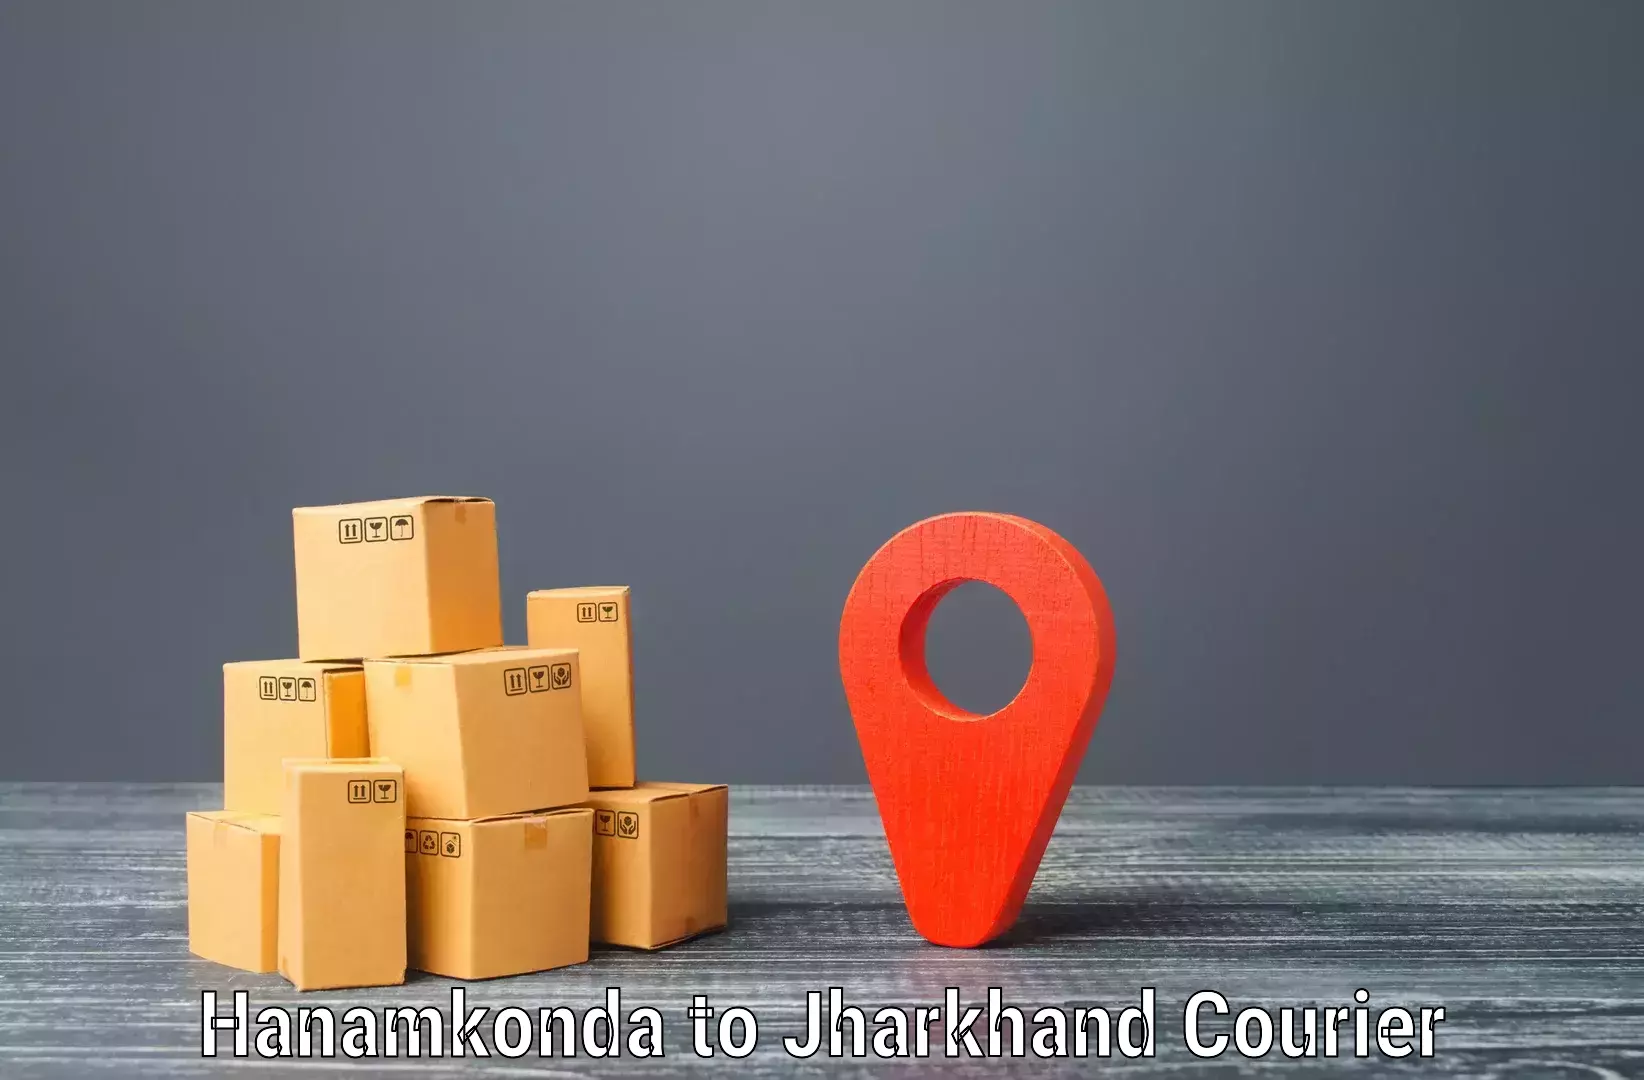 Tech-enabled shipping Hanamkonda to Jamshedpur